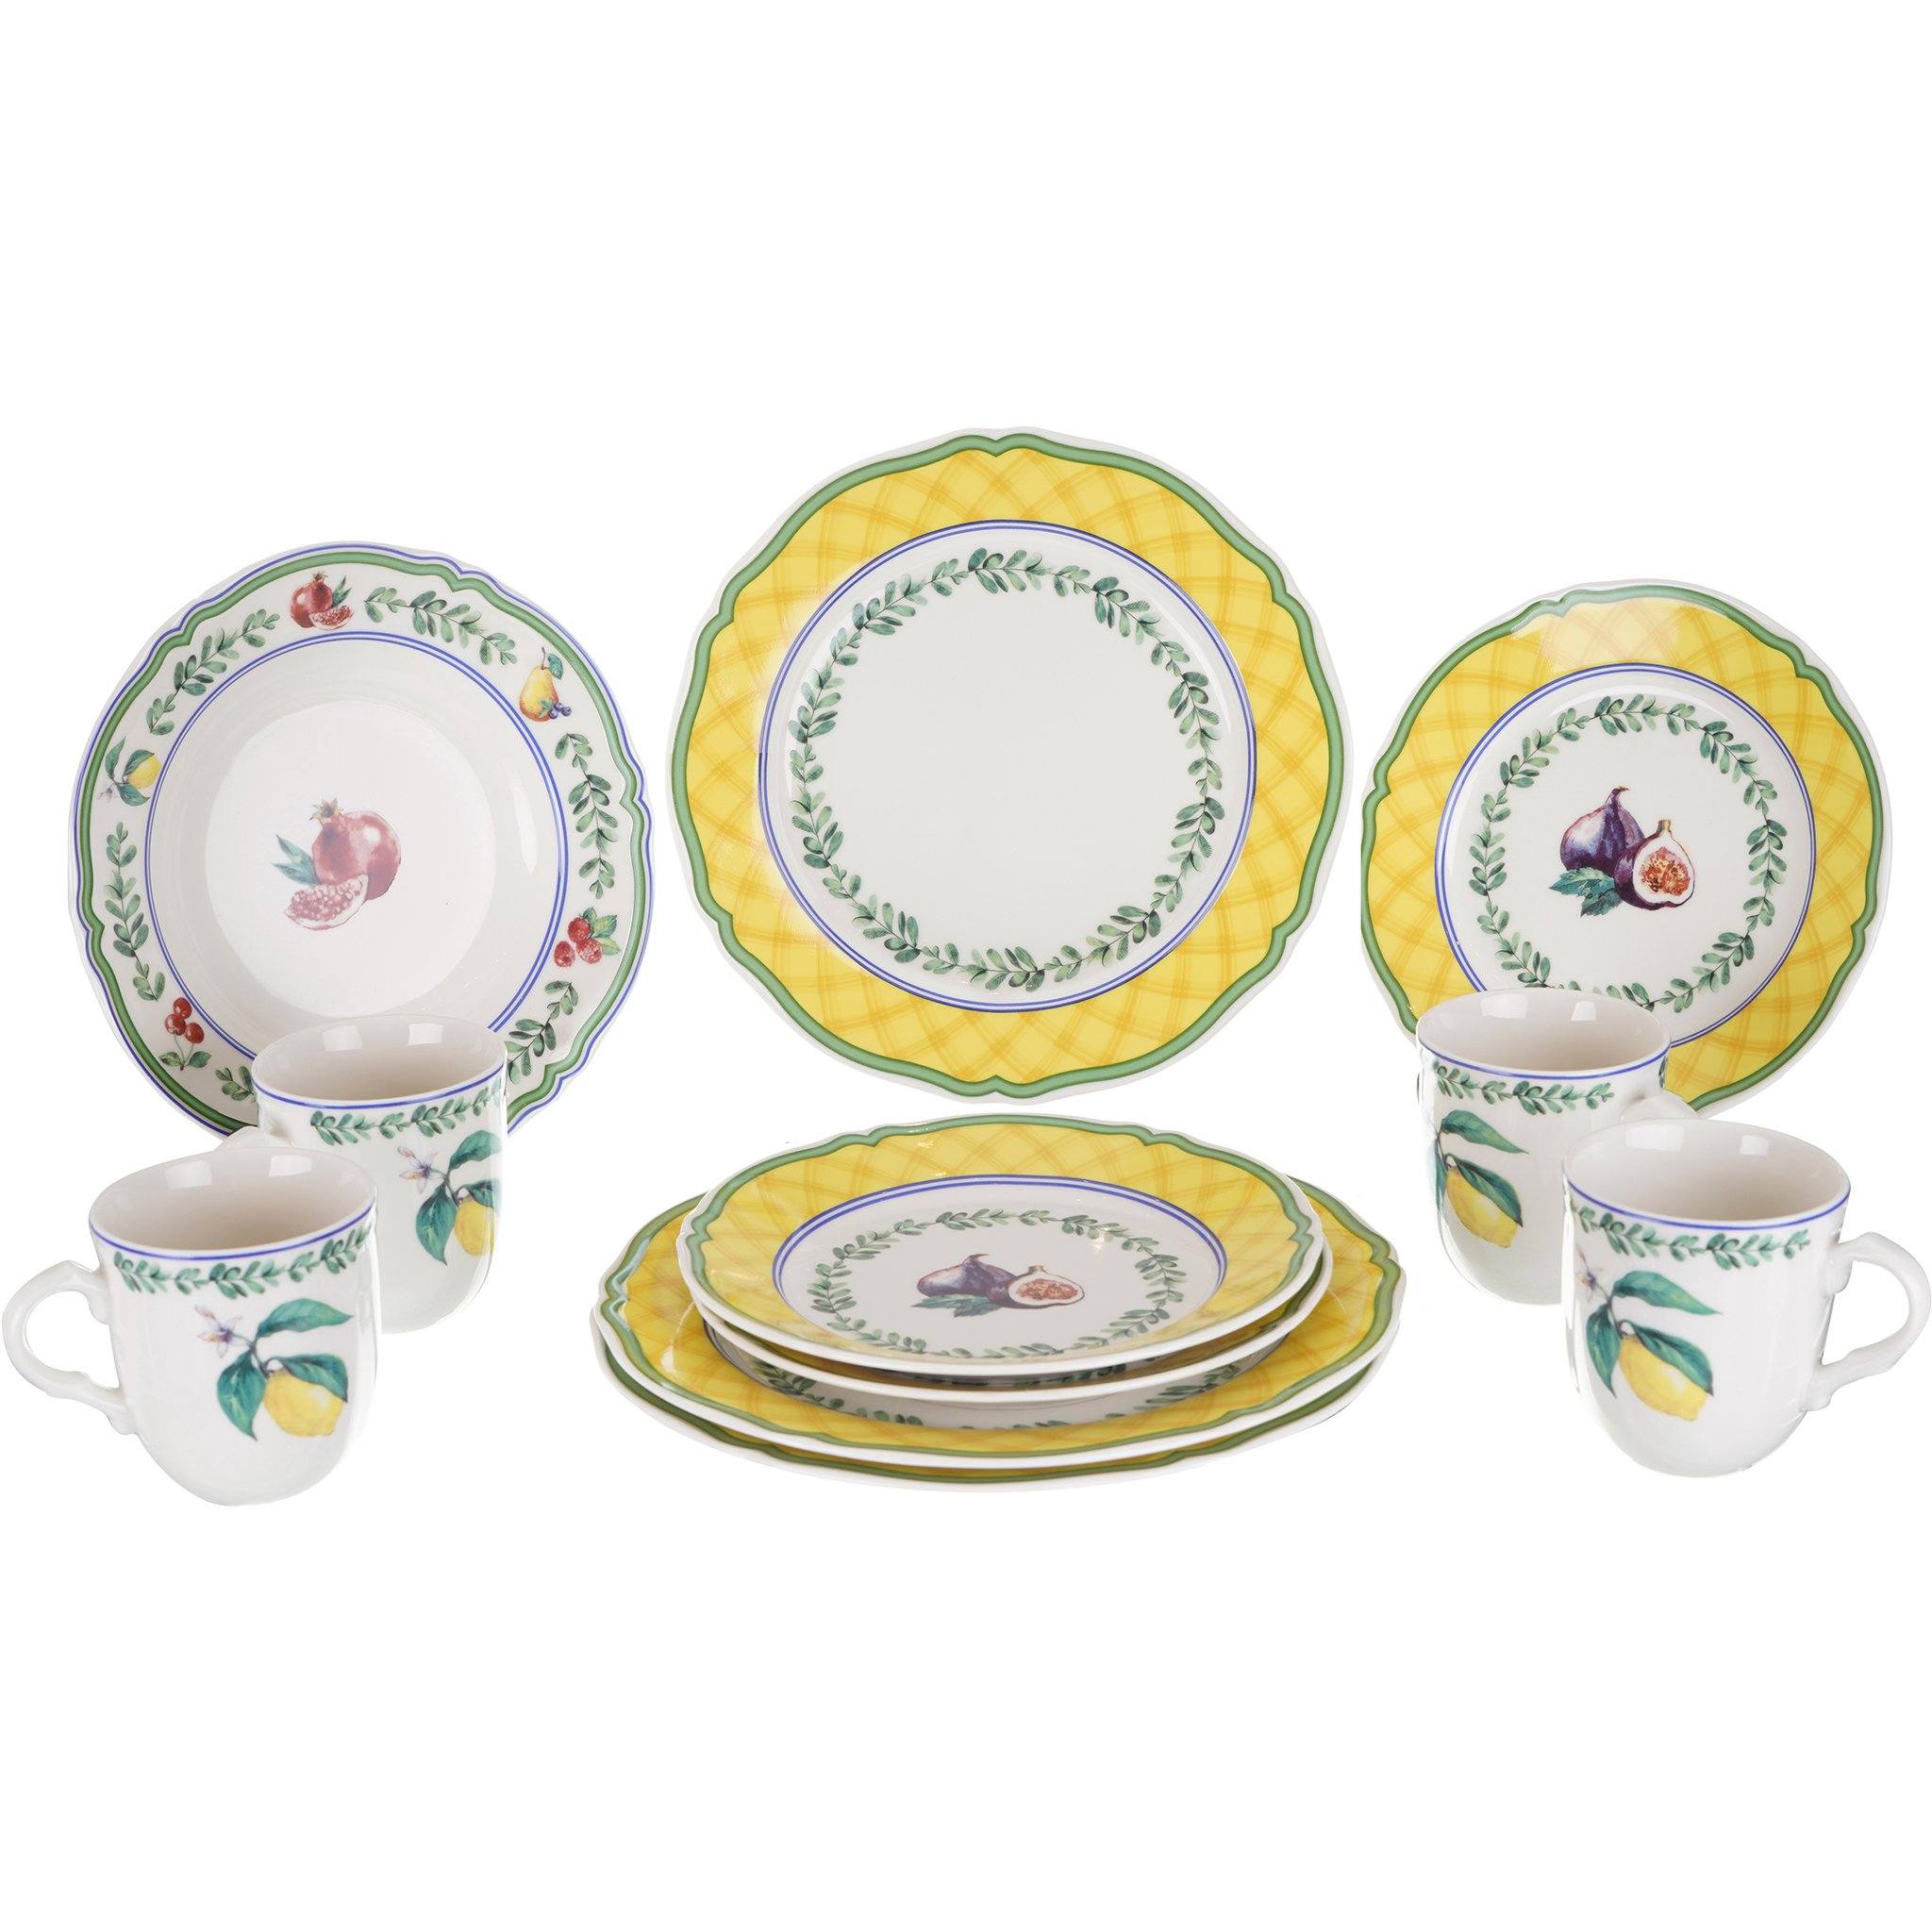 Falkenporzellan - Daily Use Dinner Set 24 Pieces - Yellow - Porcelain - 1300072